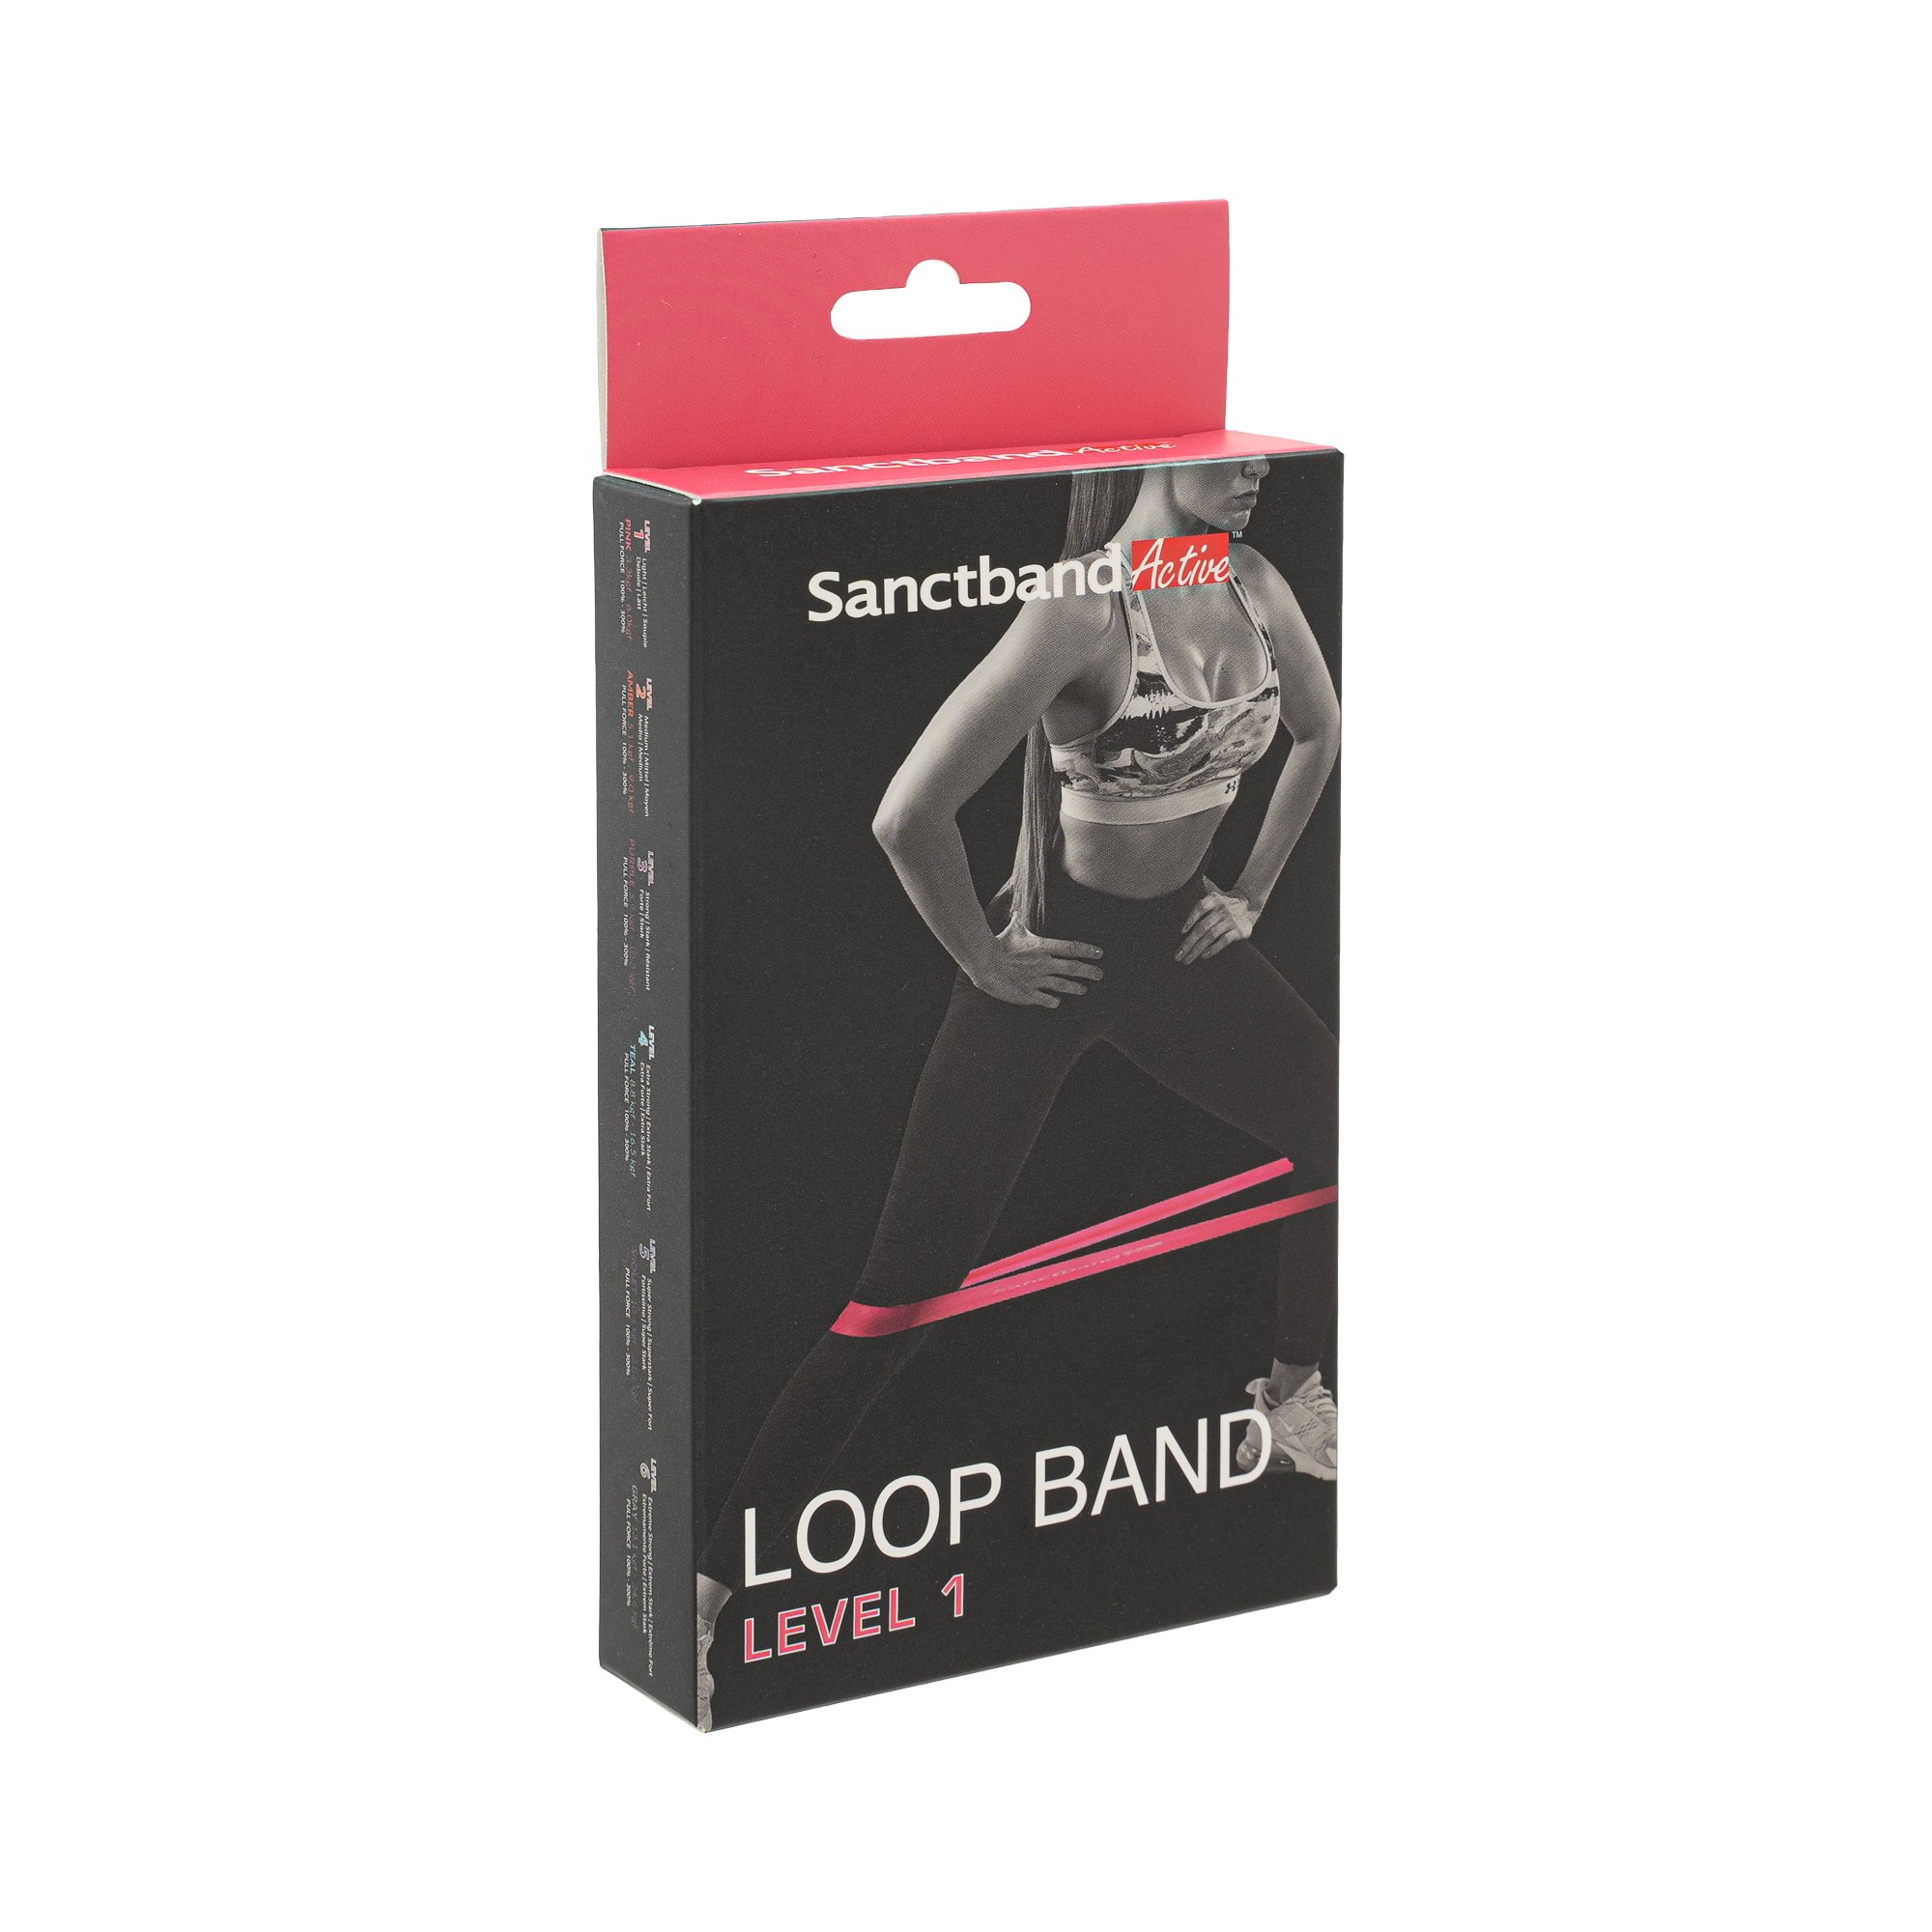 Sanctband Active Loop Fitnessband | Pink - leicht | 66 cm Umfang